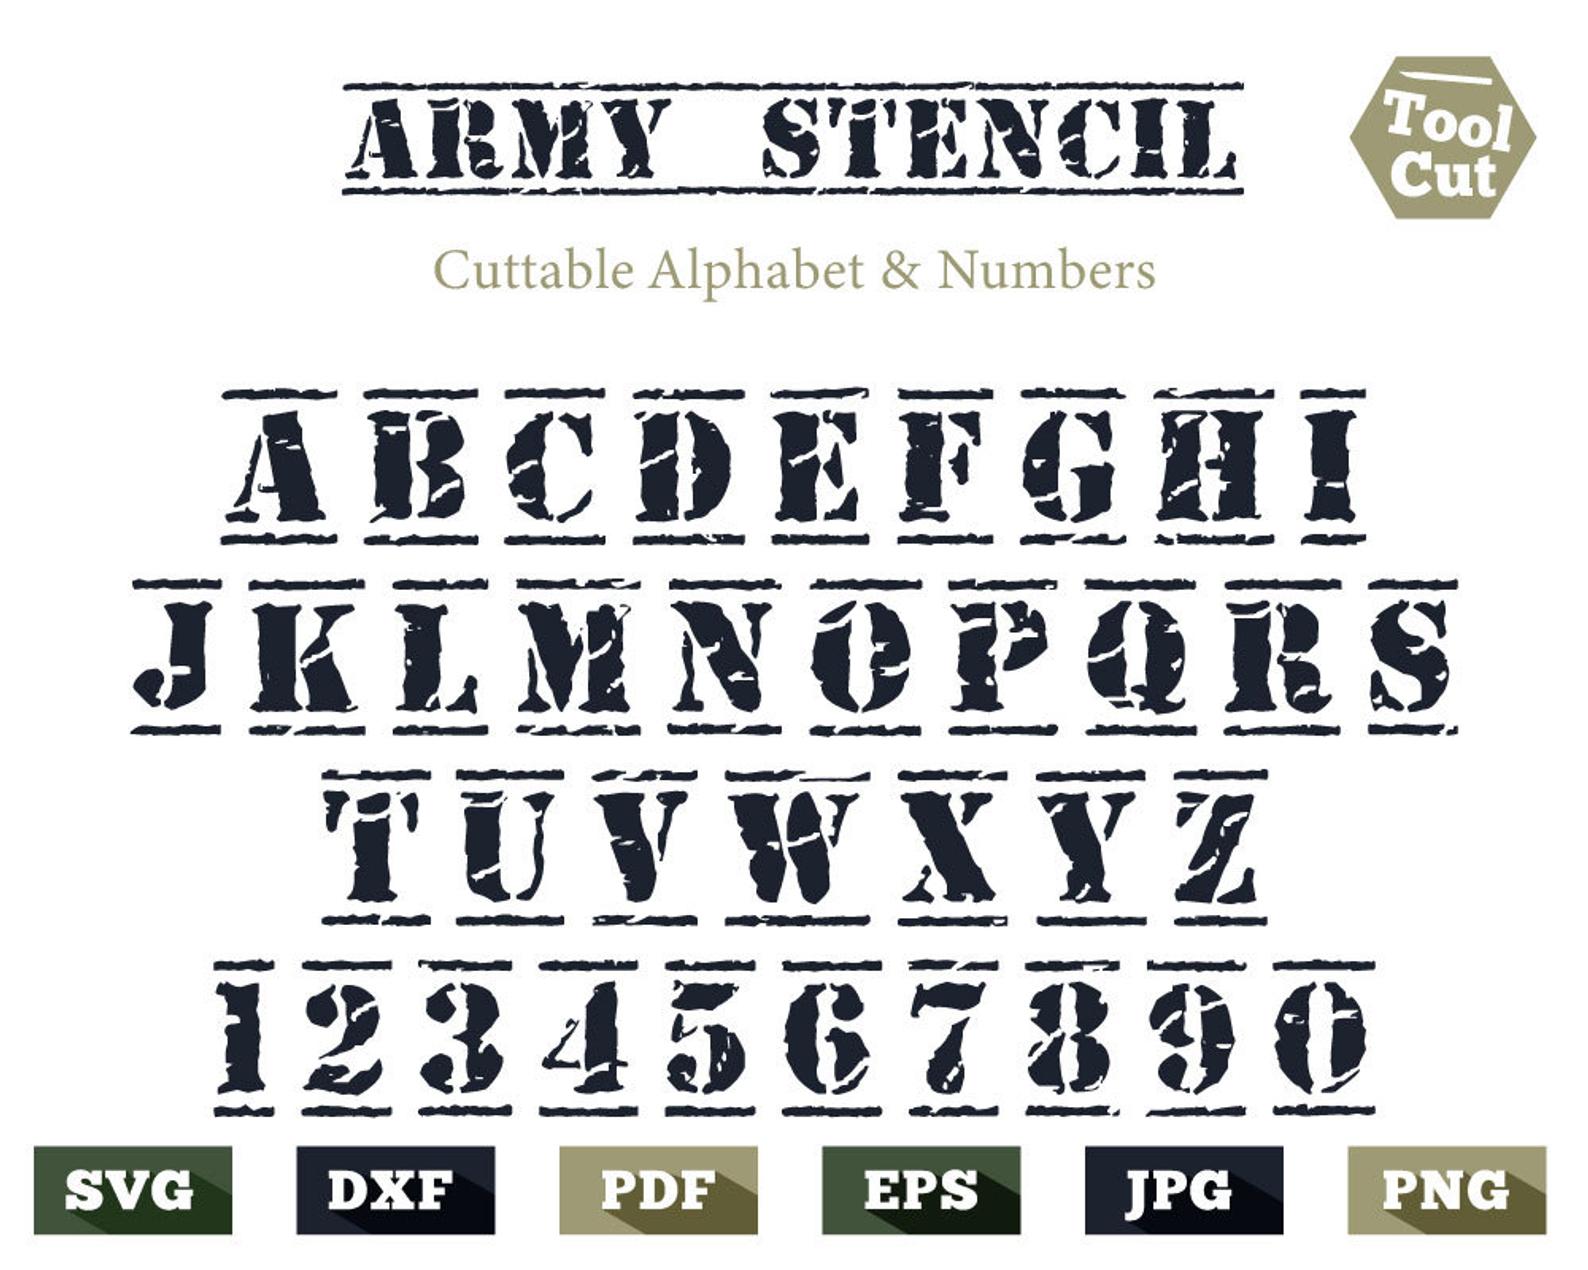 Top 10 Military Fonts 2019 (Army, Navy & Stencil) Pixelsmithstudios